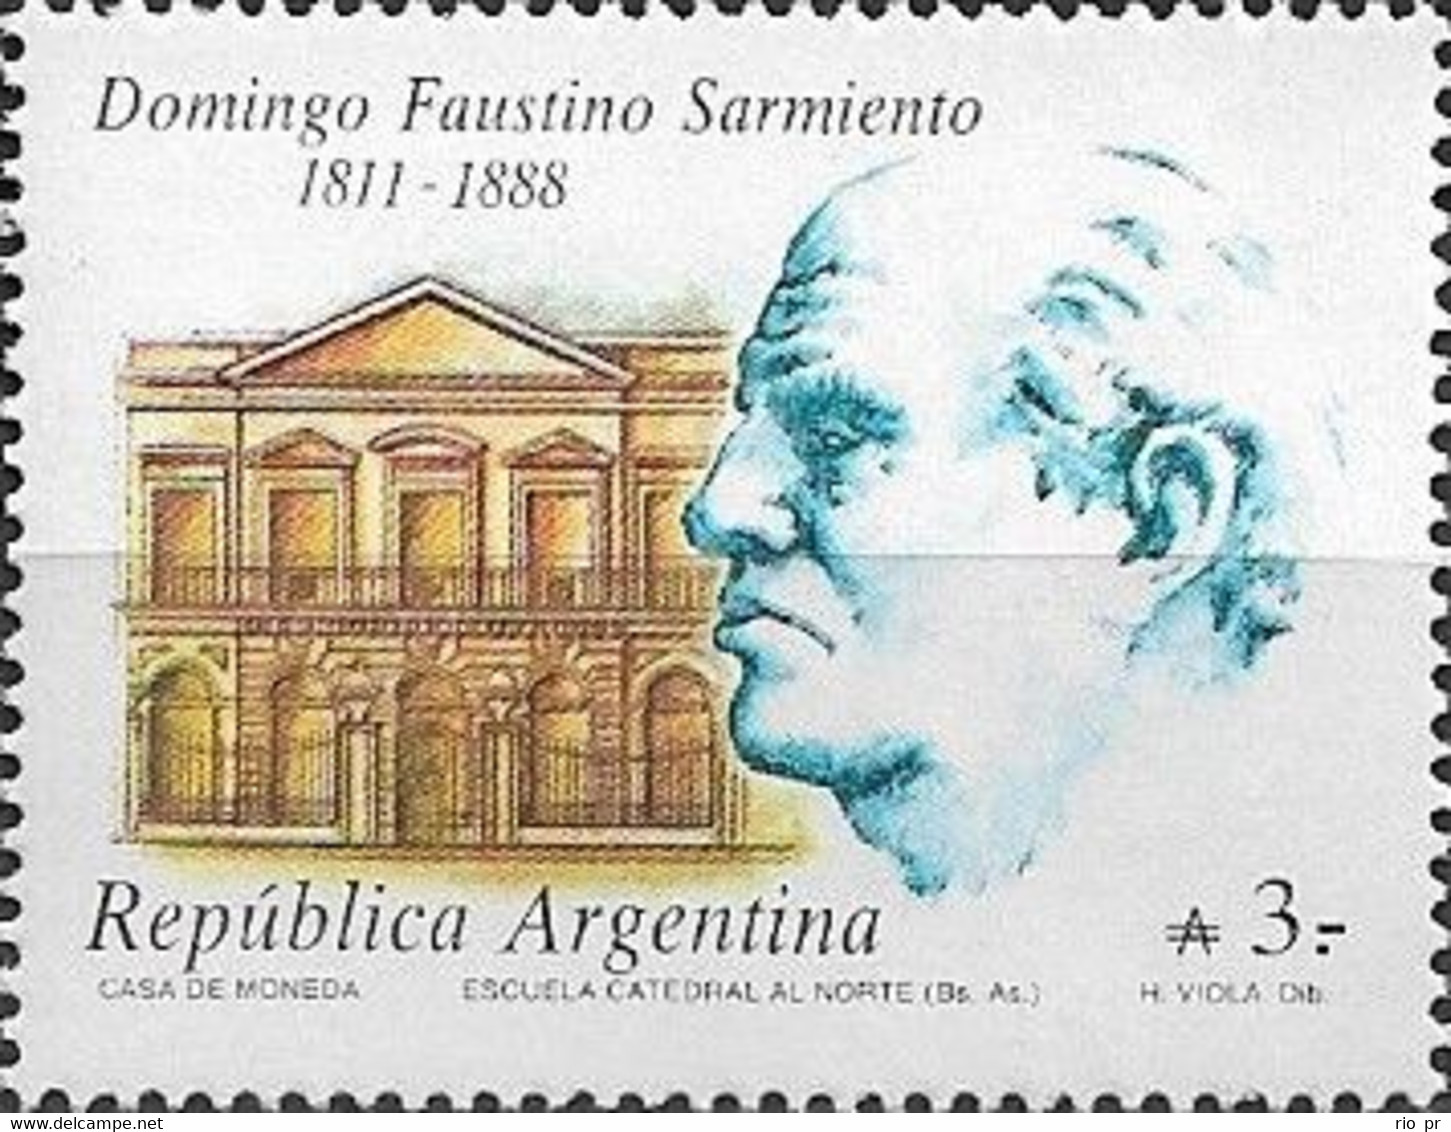 ARGENTINA - DEATH CENTENARY OF DOMINGO FAUSTINO SARMIENTO (1811-1888), ARGENTINE ACTIVIST/STATESMAN 1988 - MNH - Unused Stamps